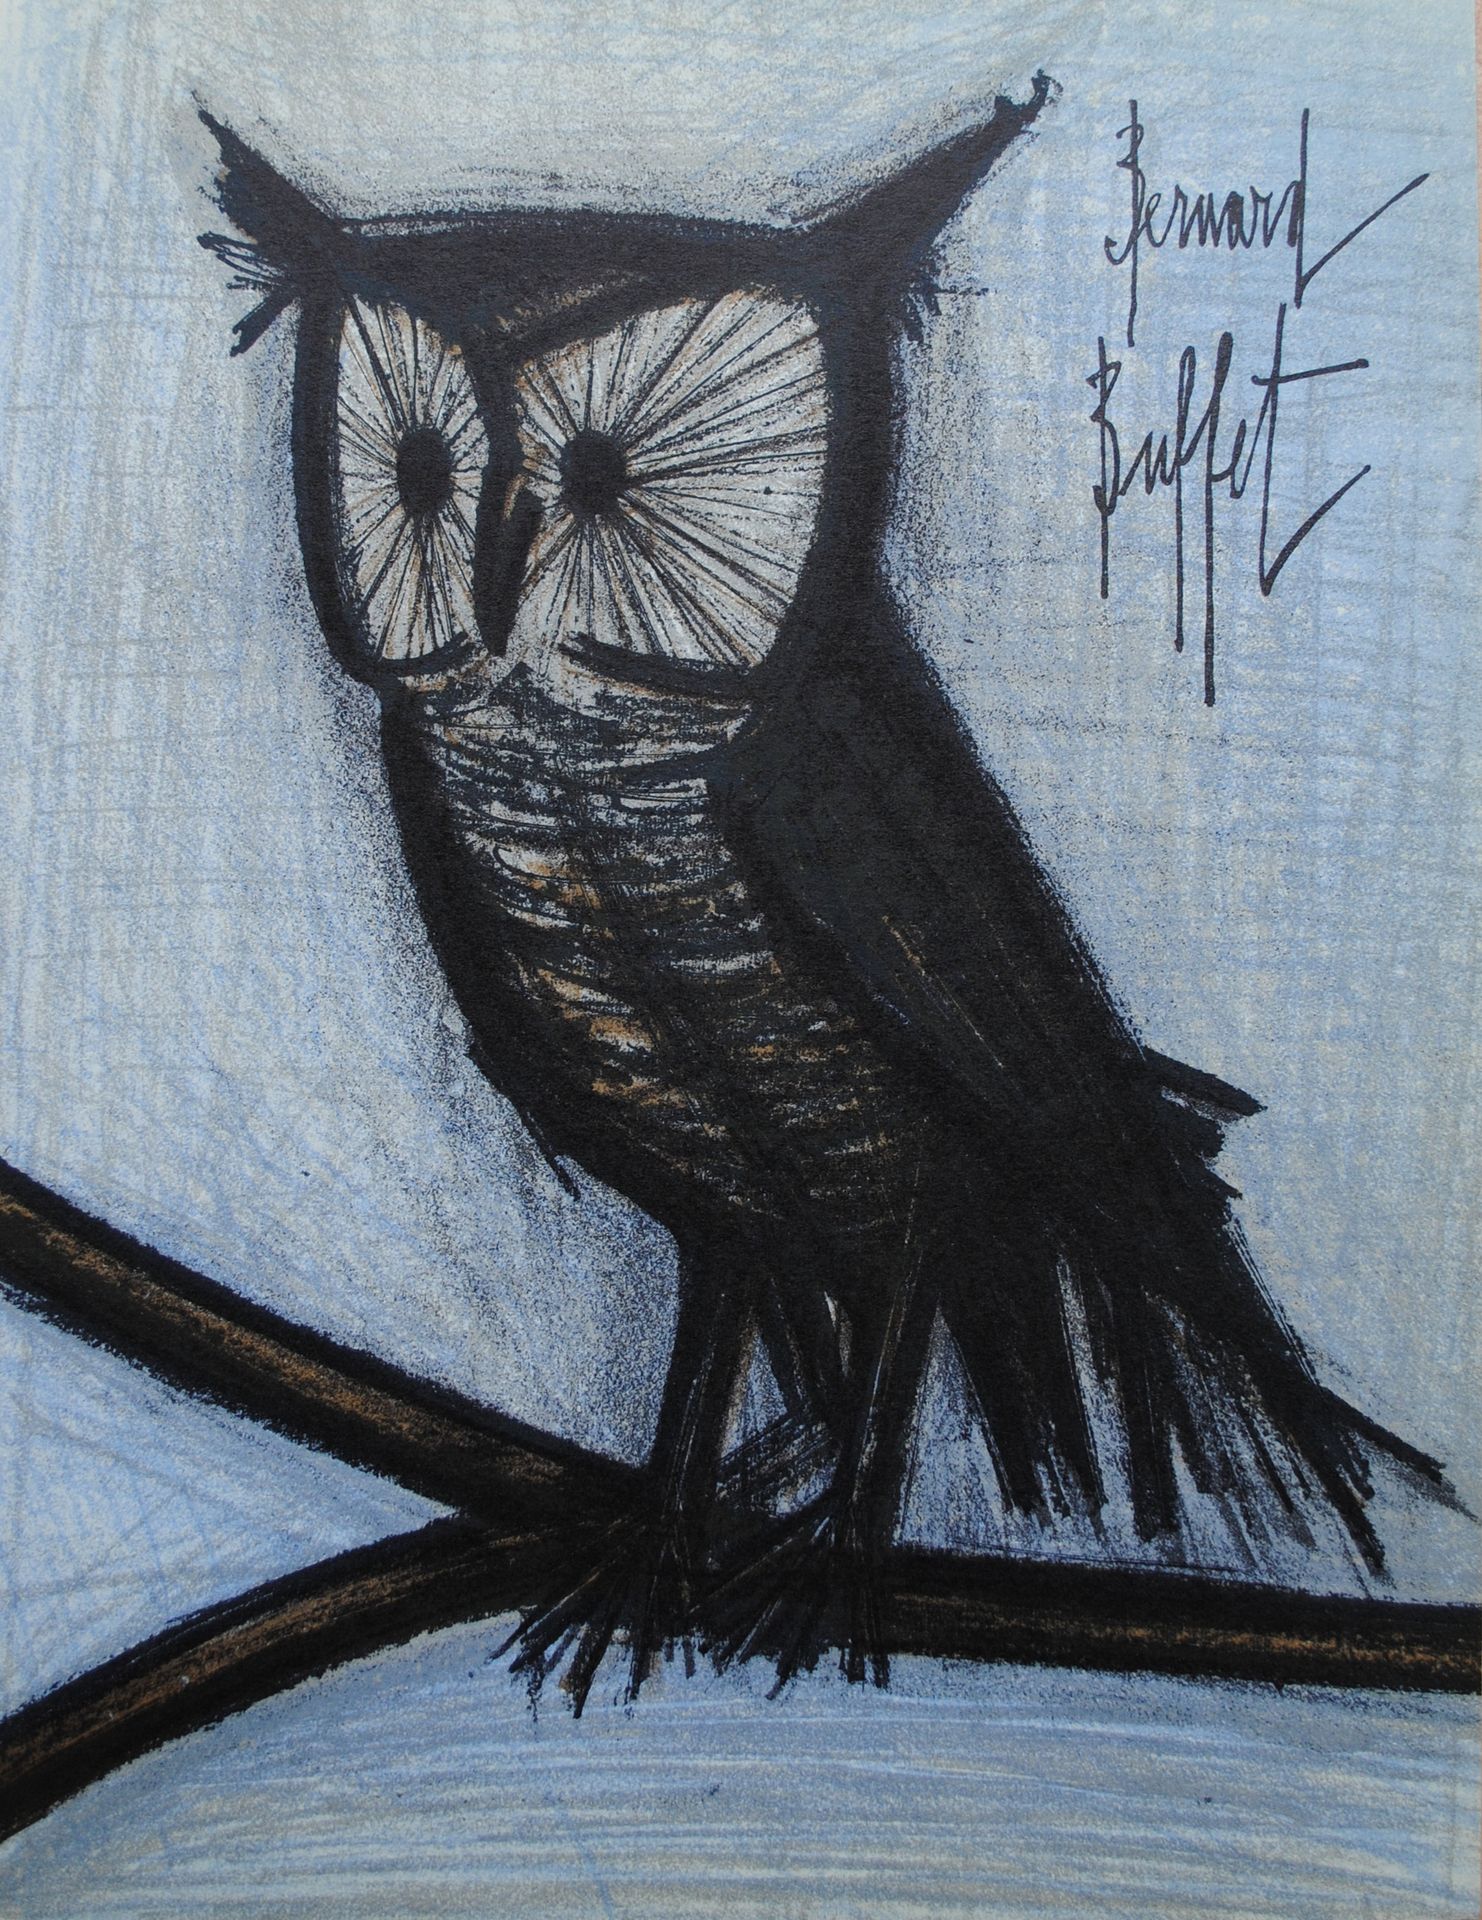 Bernard Buffet 伯纳德-布菲特(1928-1999)

小猫头鹰

牛皮纸上的原始石版画

板块中的签名

包括在艺术家的目录中

1967年在M&hellip;